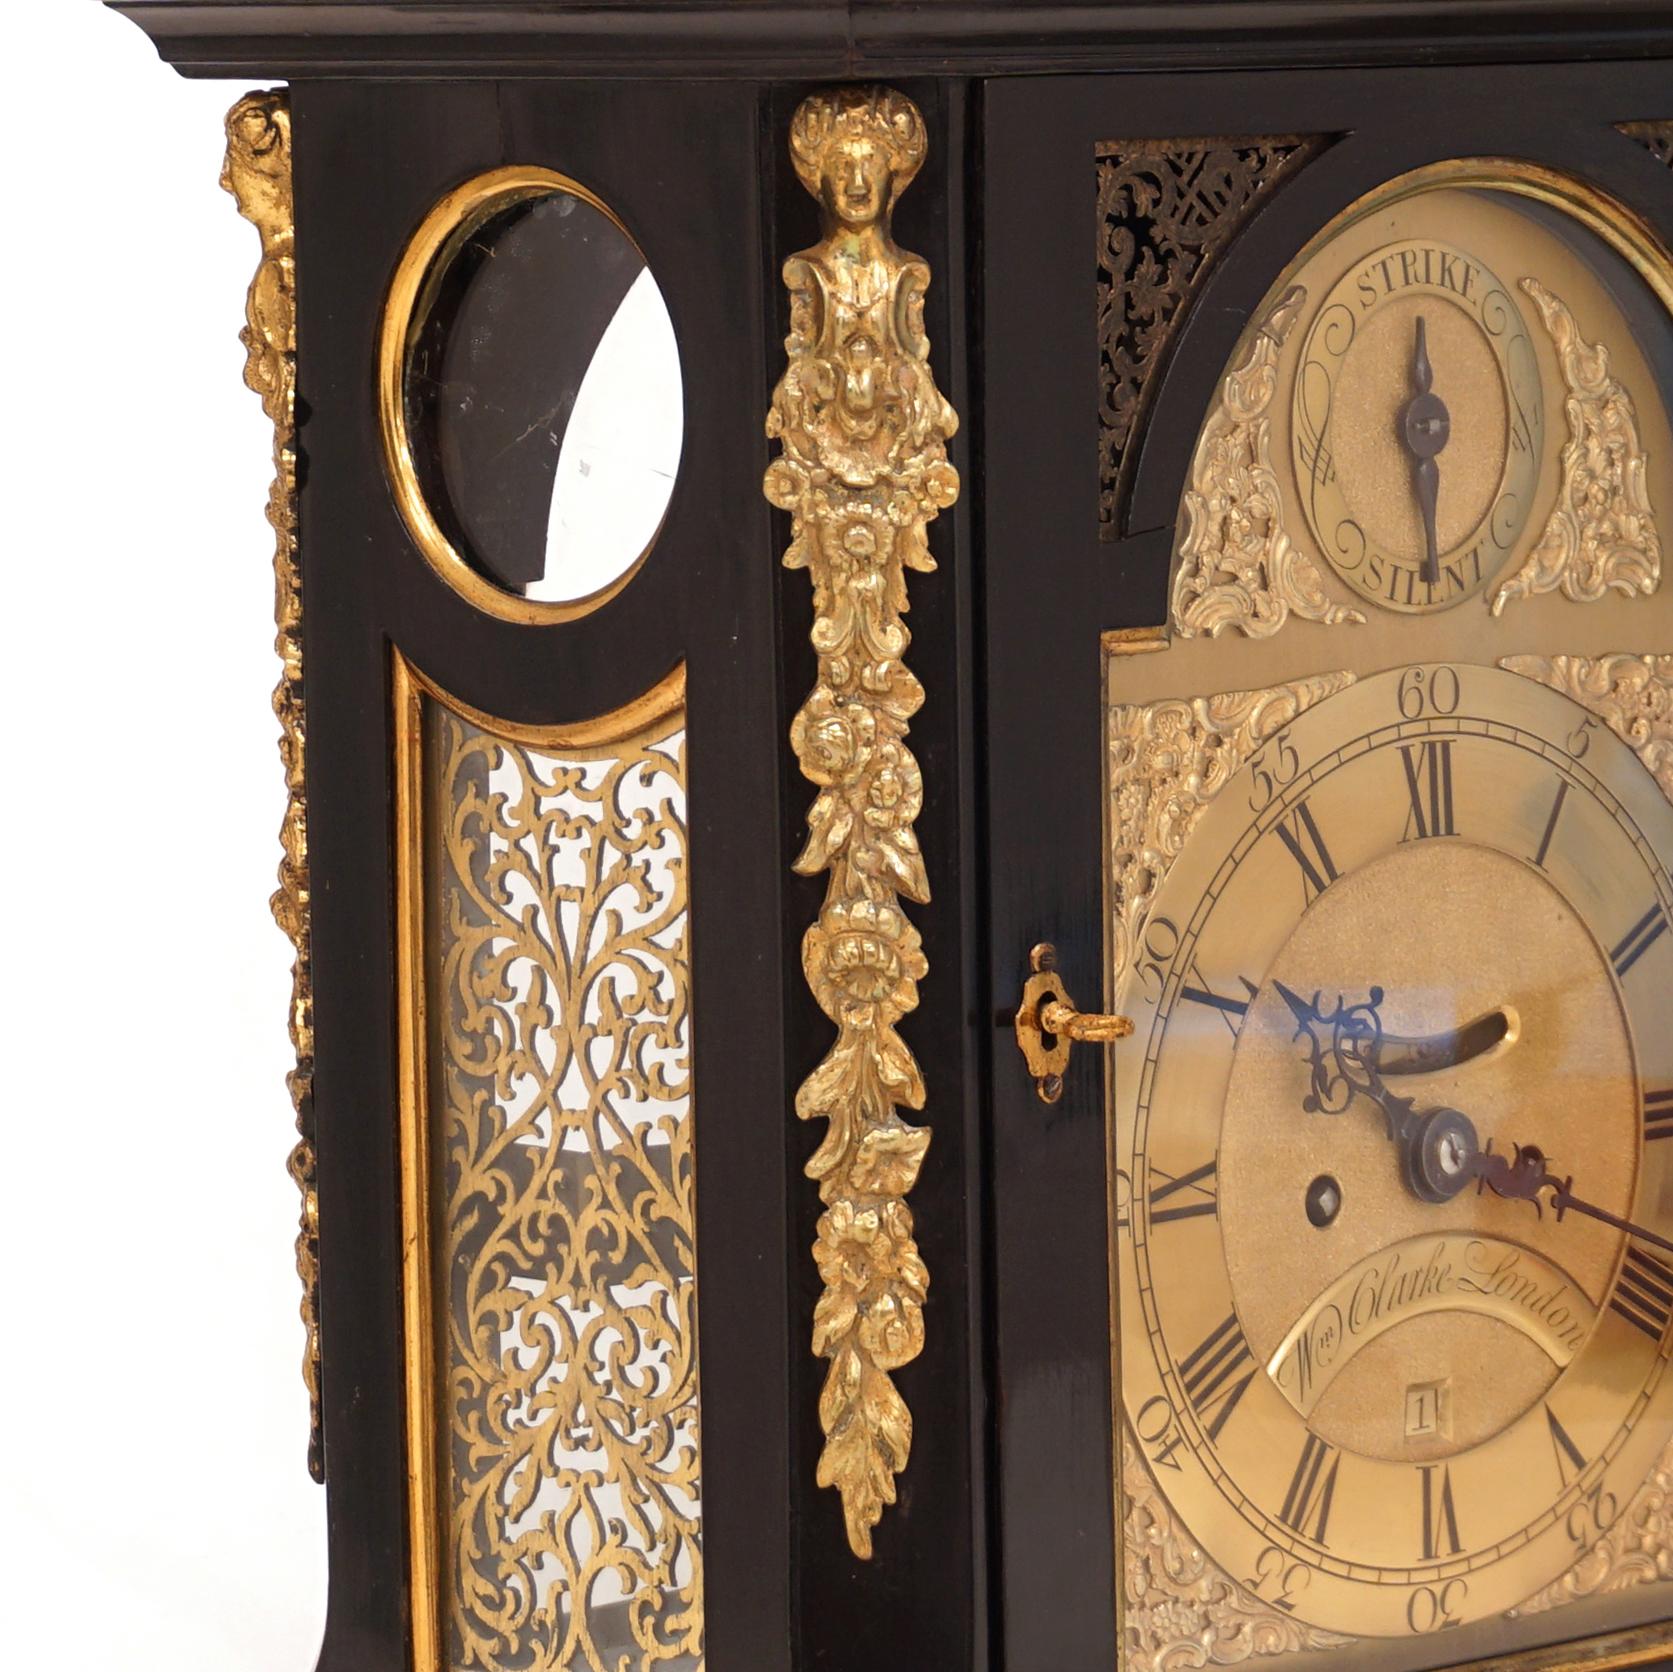 this clock in 1750